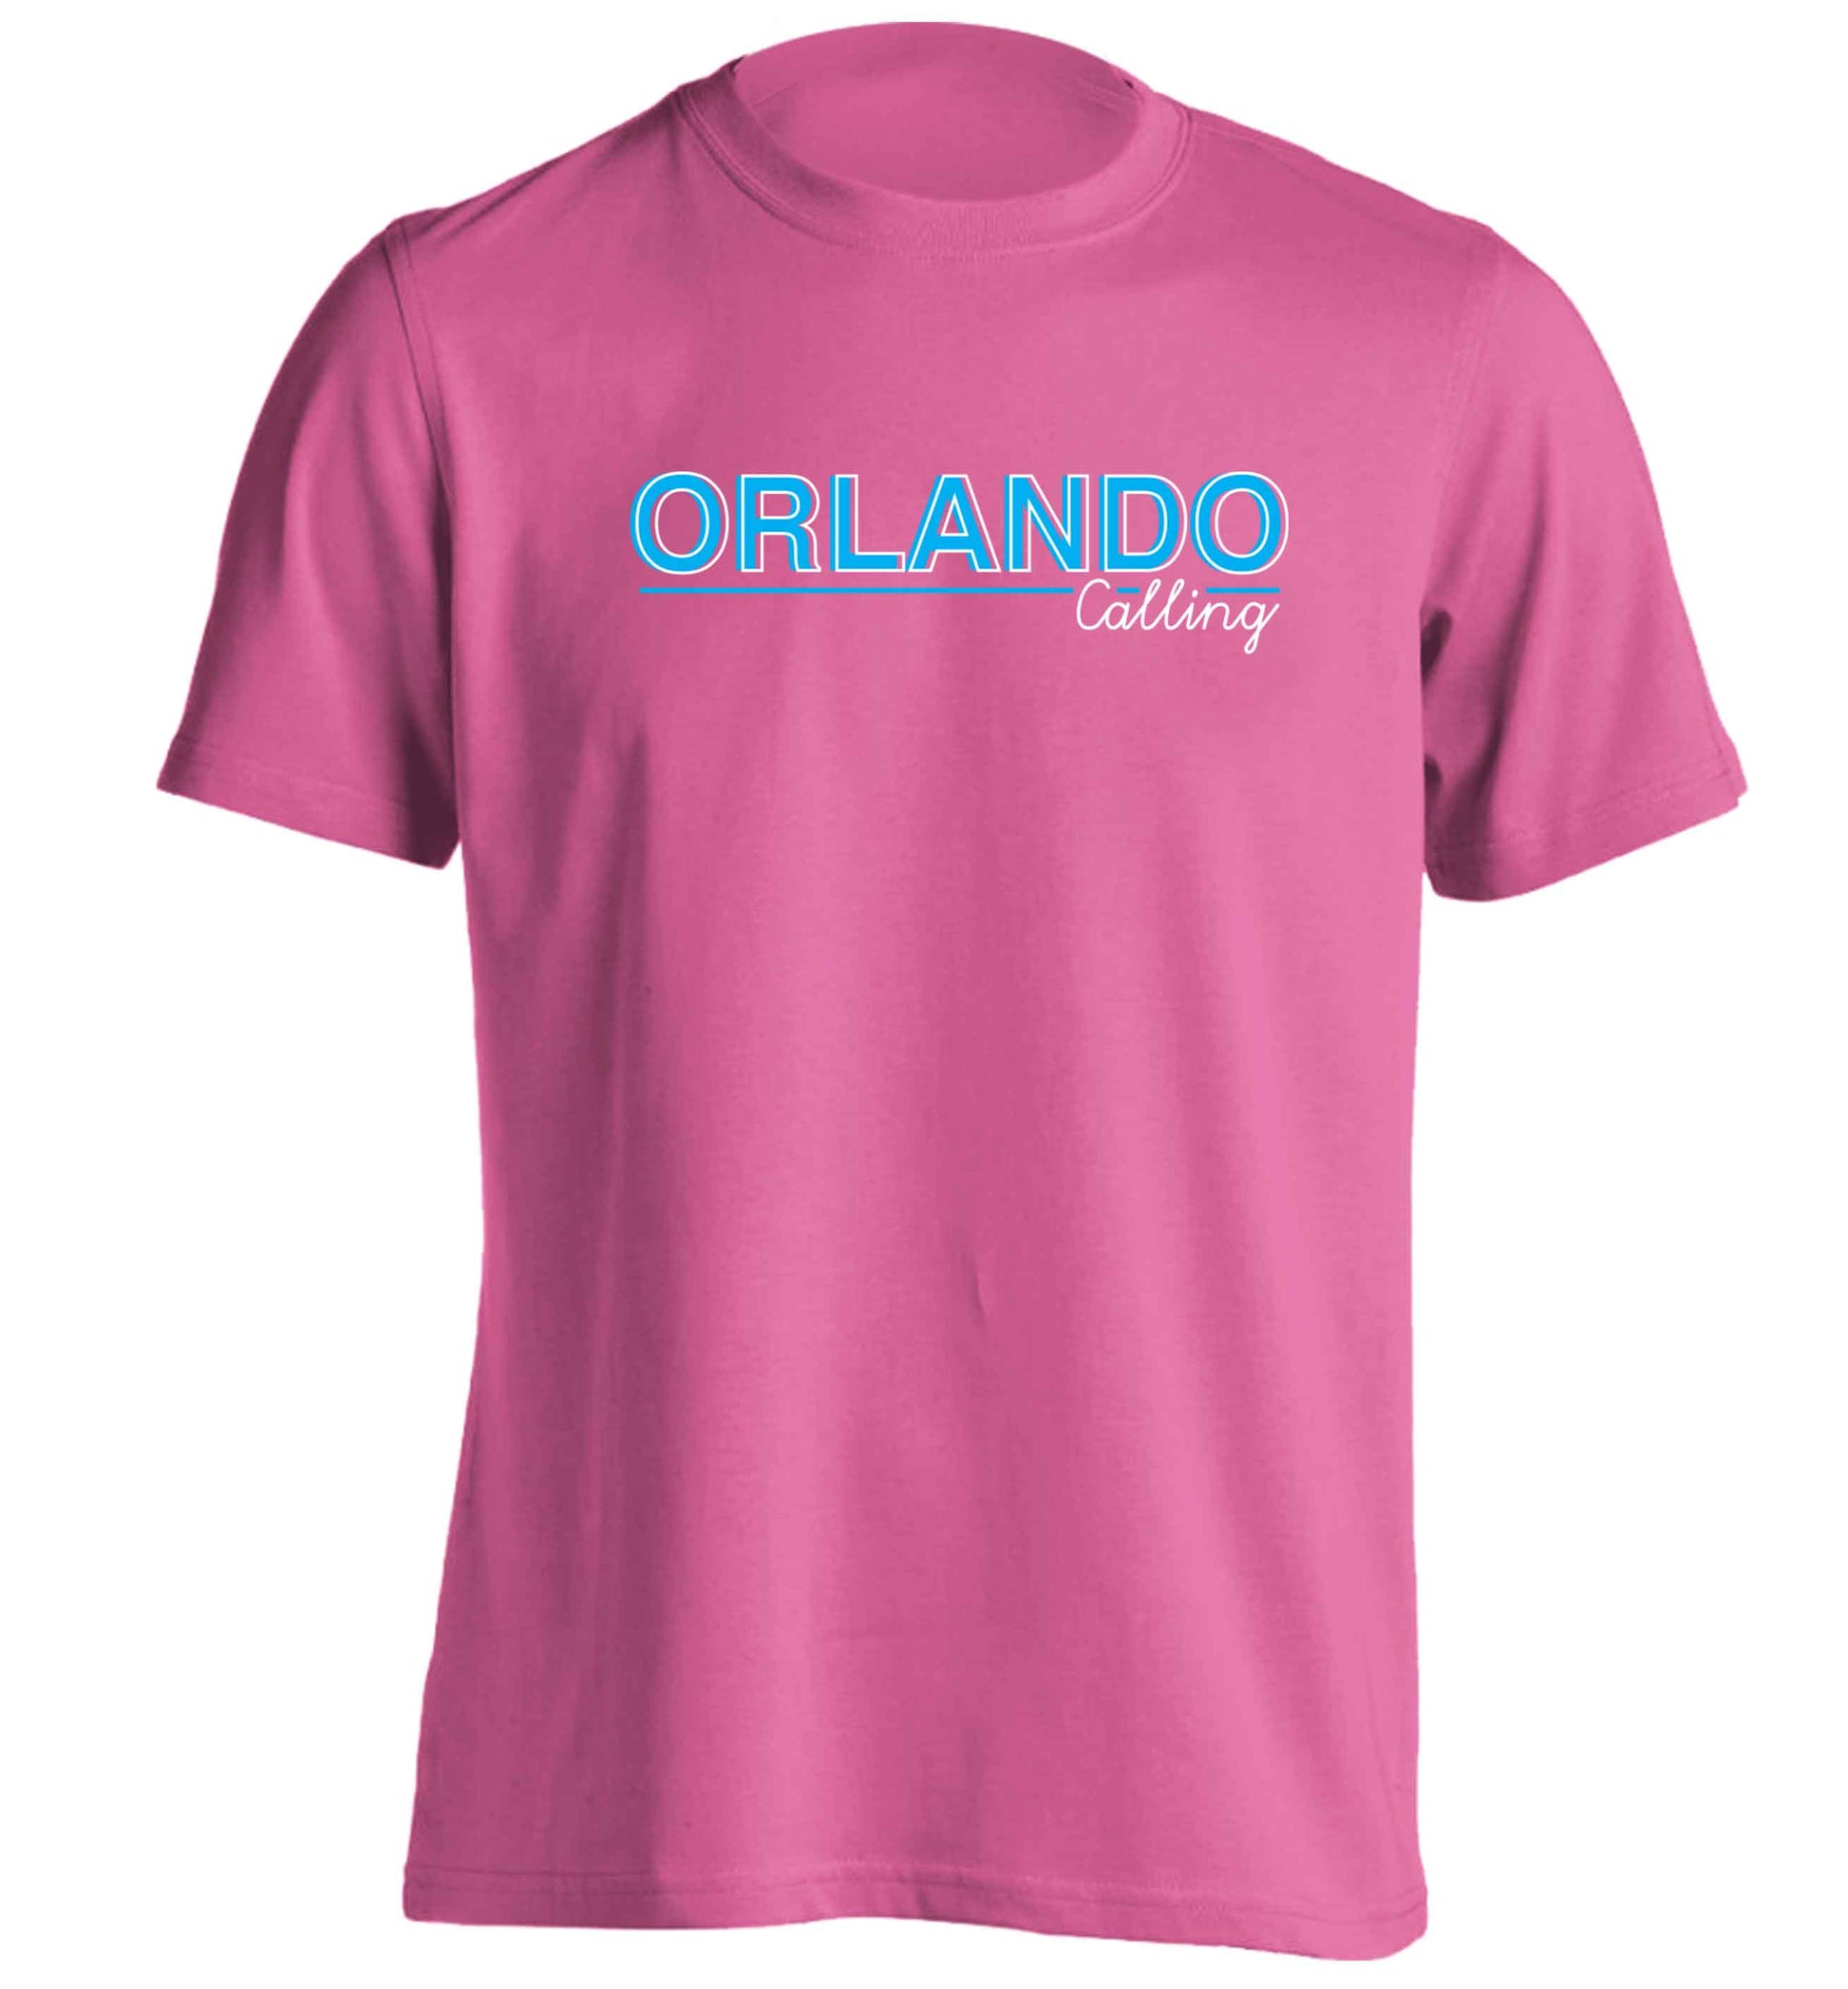 Orlando calling adults unisex pink Tshirt 2XL